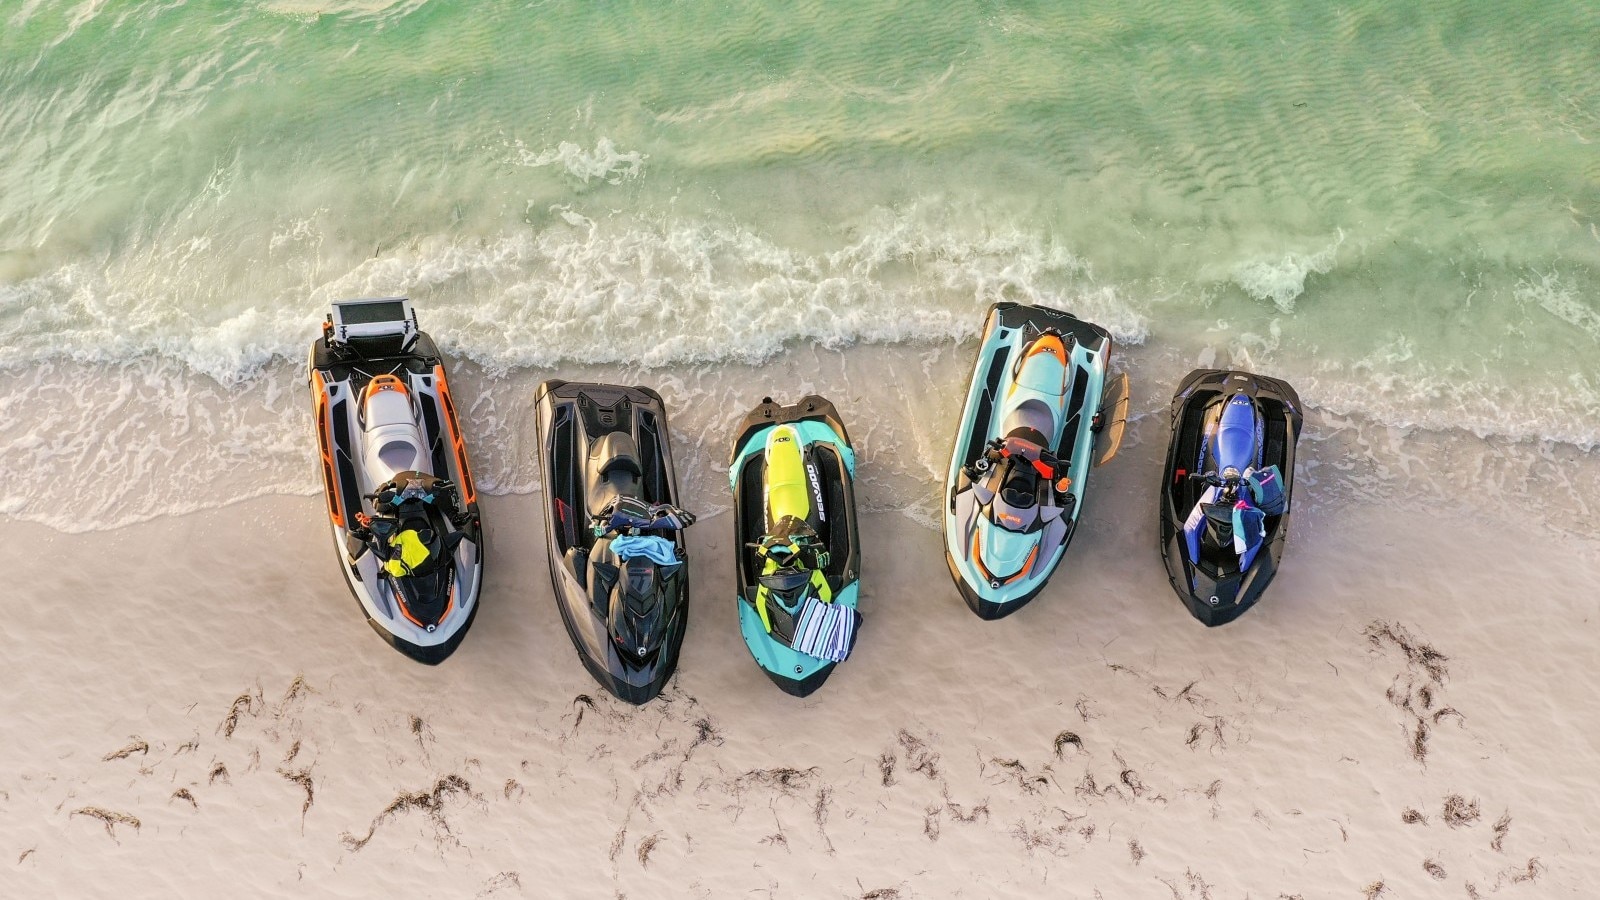 Multiple Sea-Doo watercraft on a beach